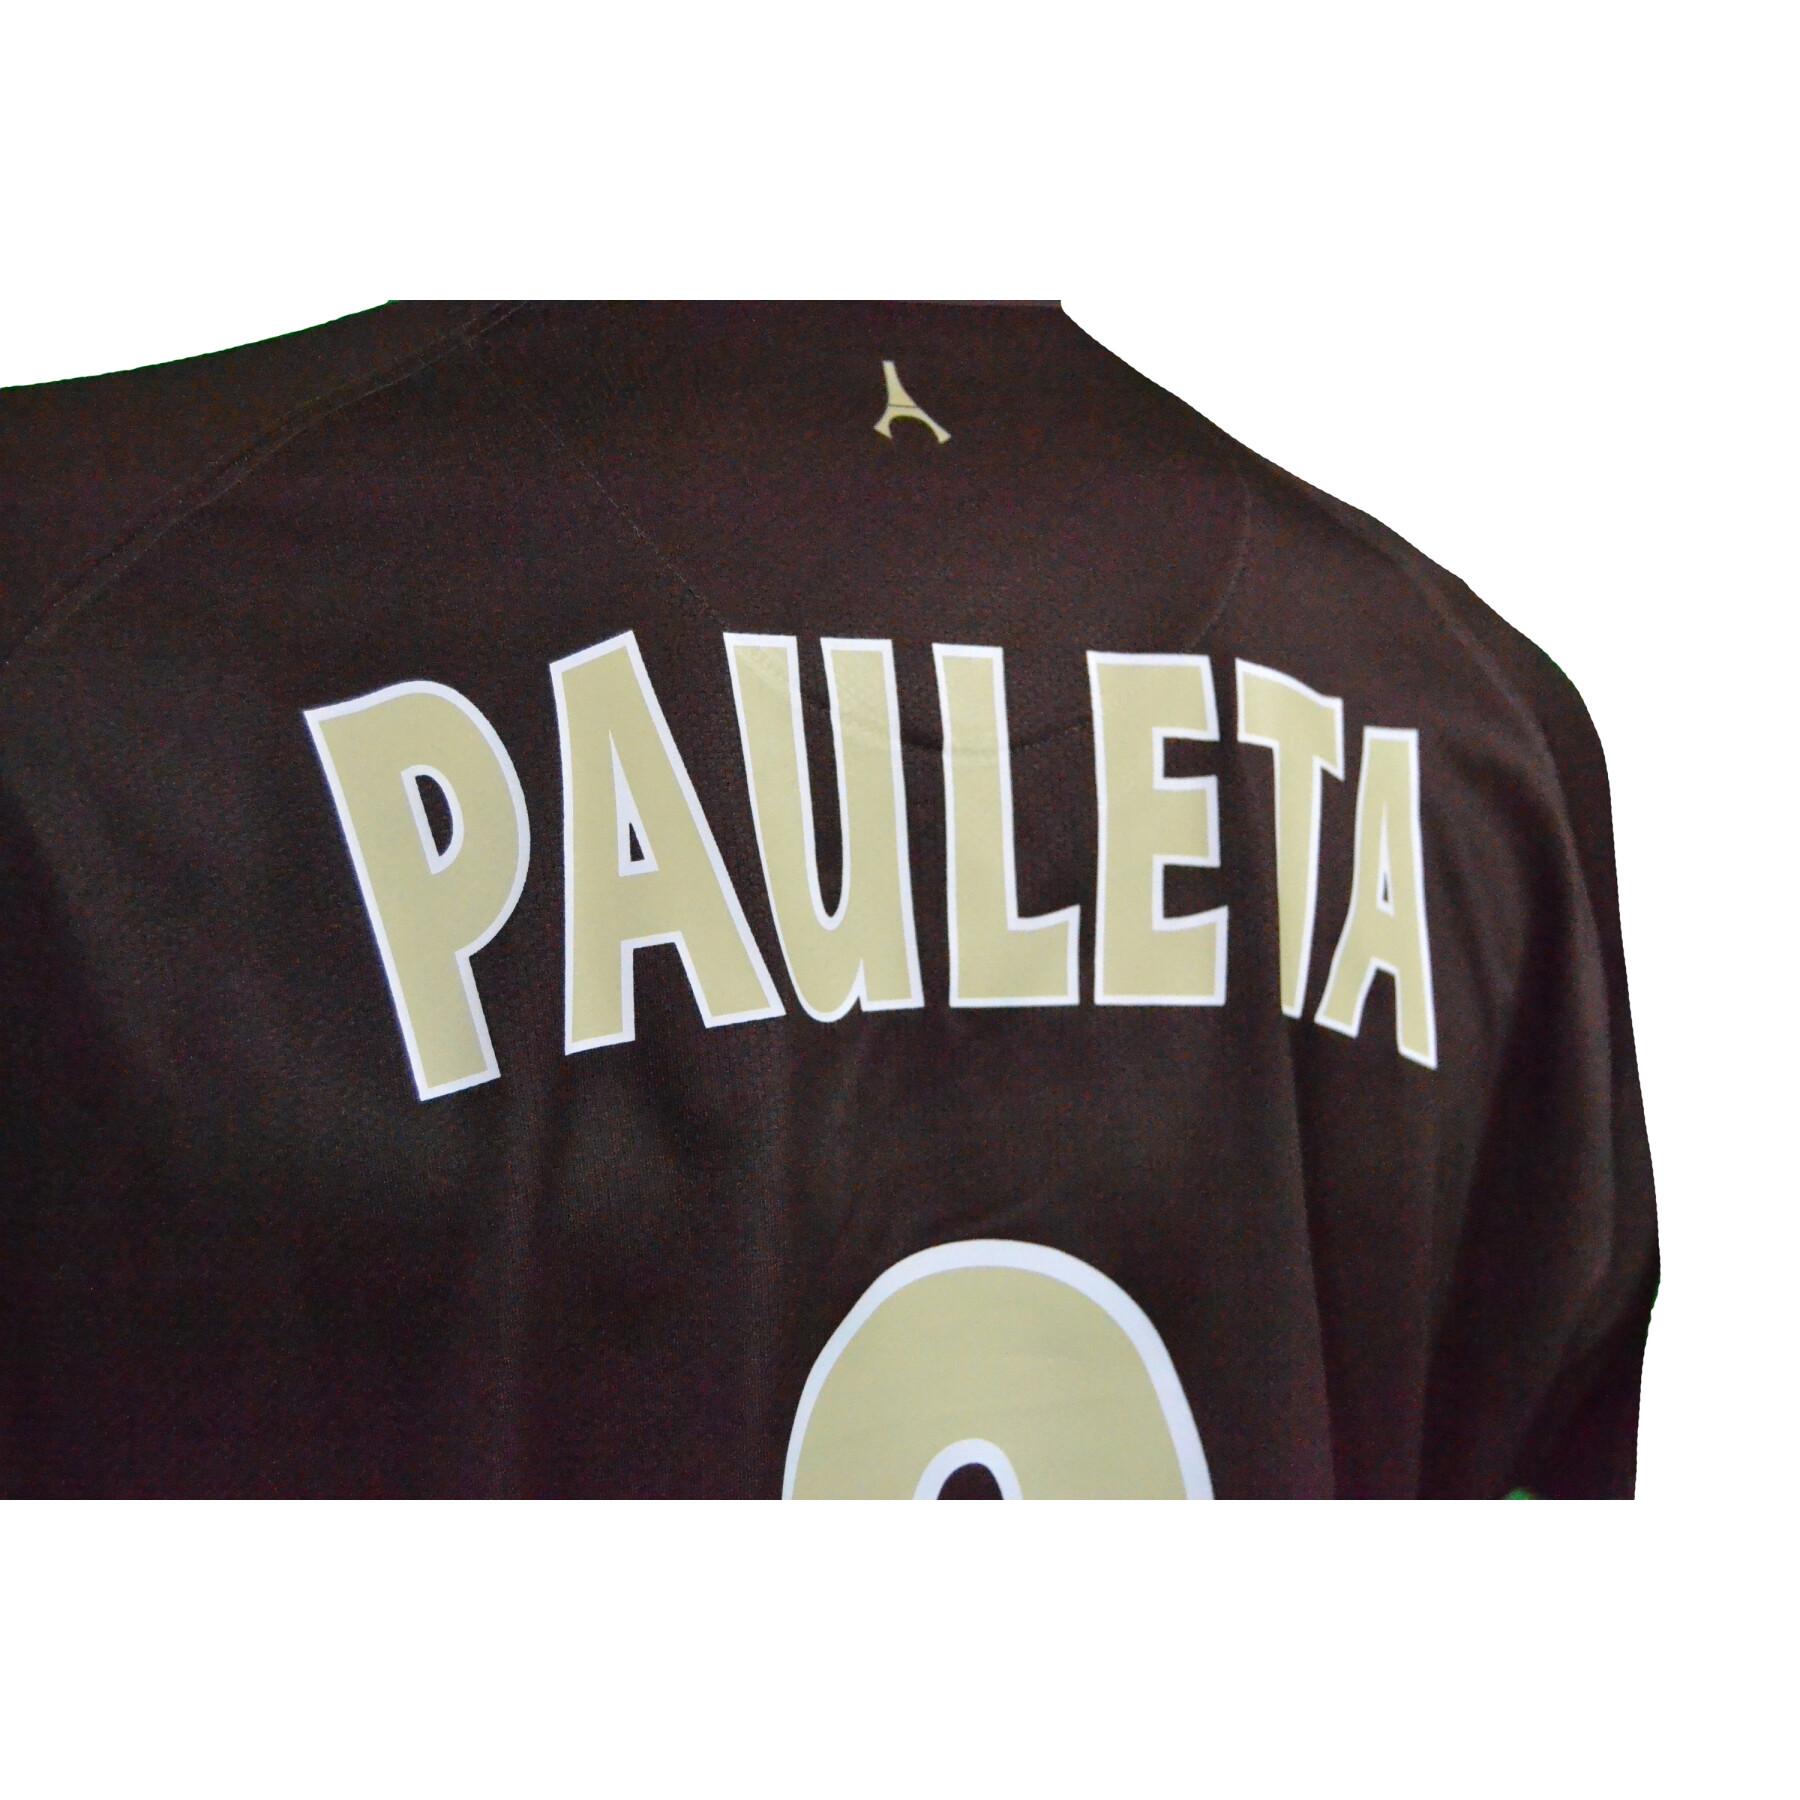 Outdoor jersey PSG 2006/07 Pauleta